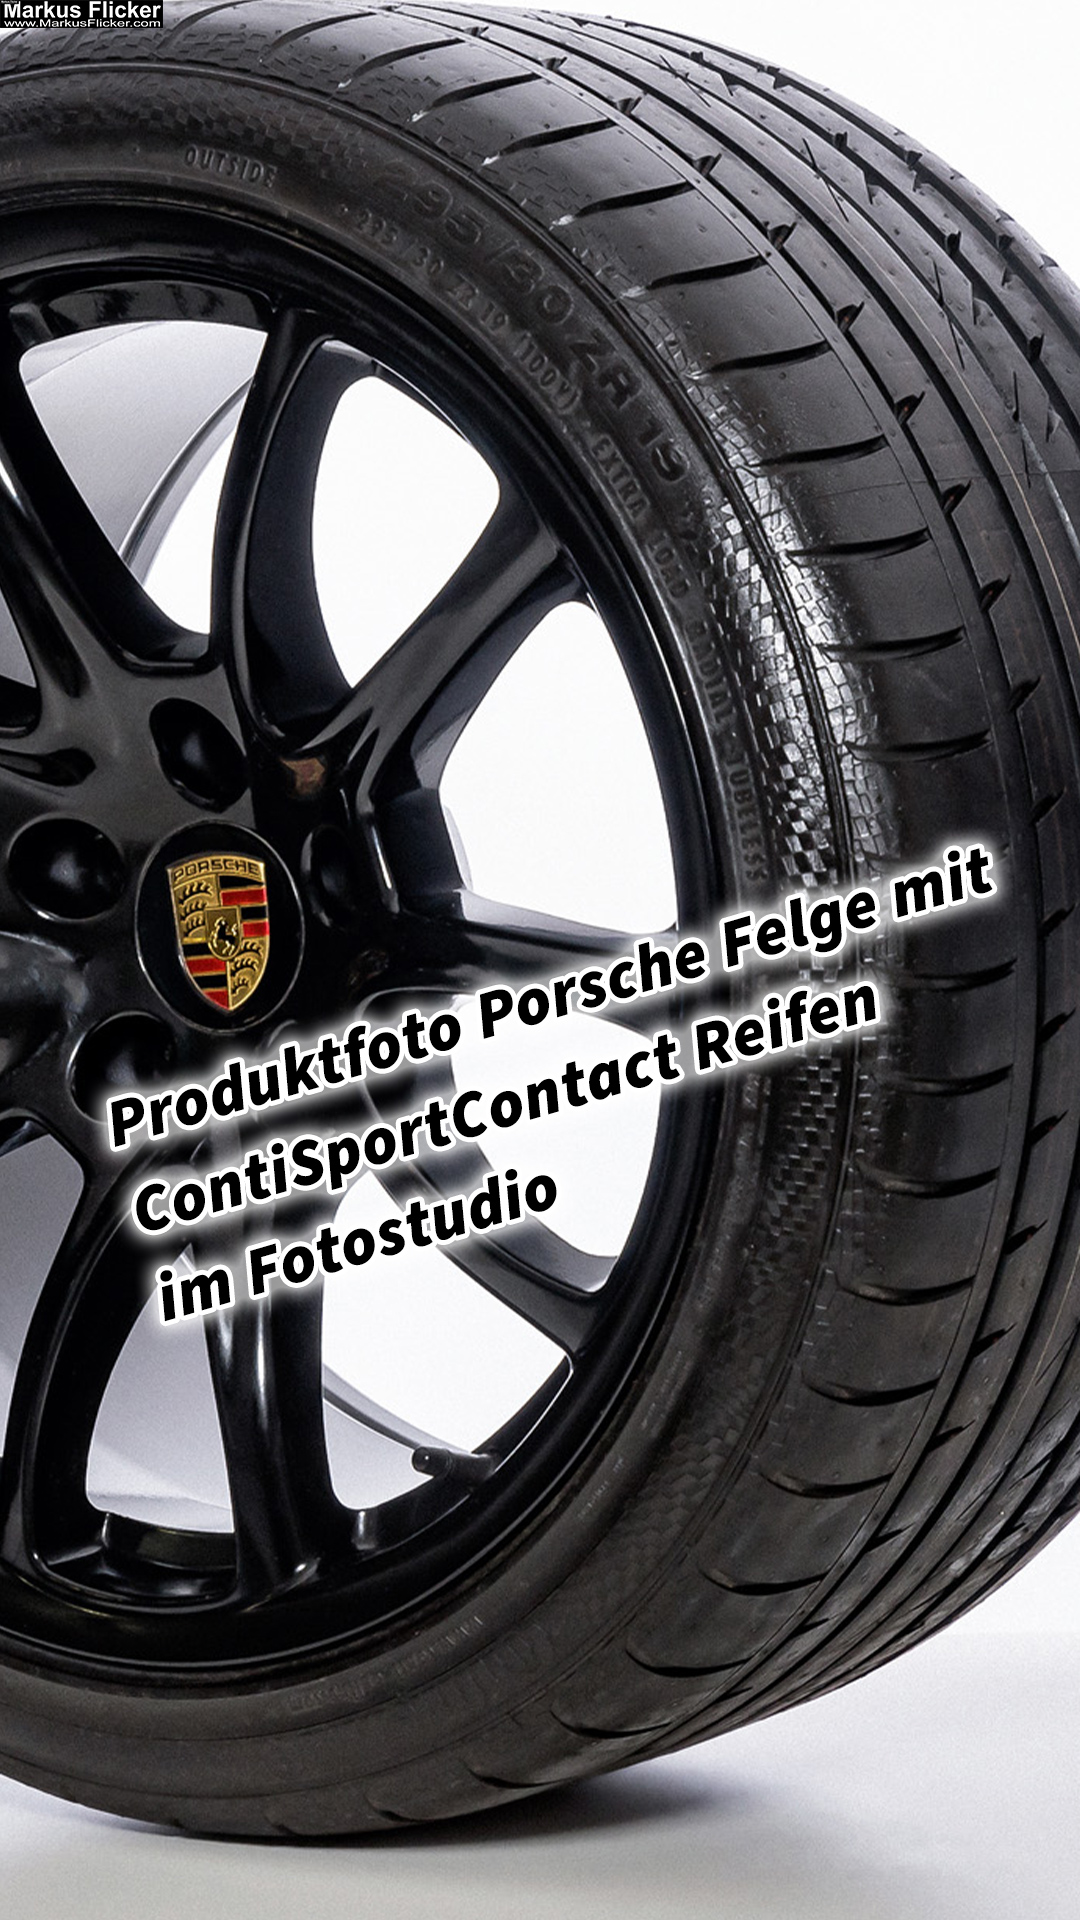 Produktfoto Porsche Felge mit ContiSportContact Reifen im Fotostudio